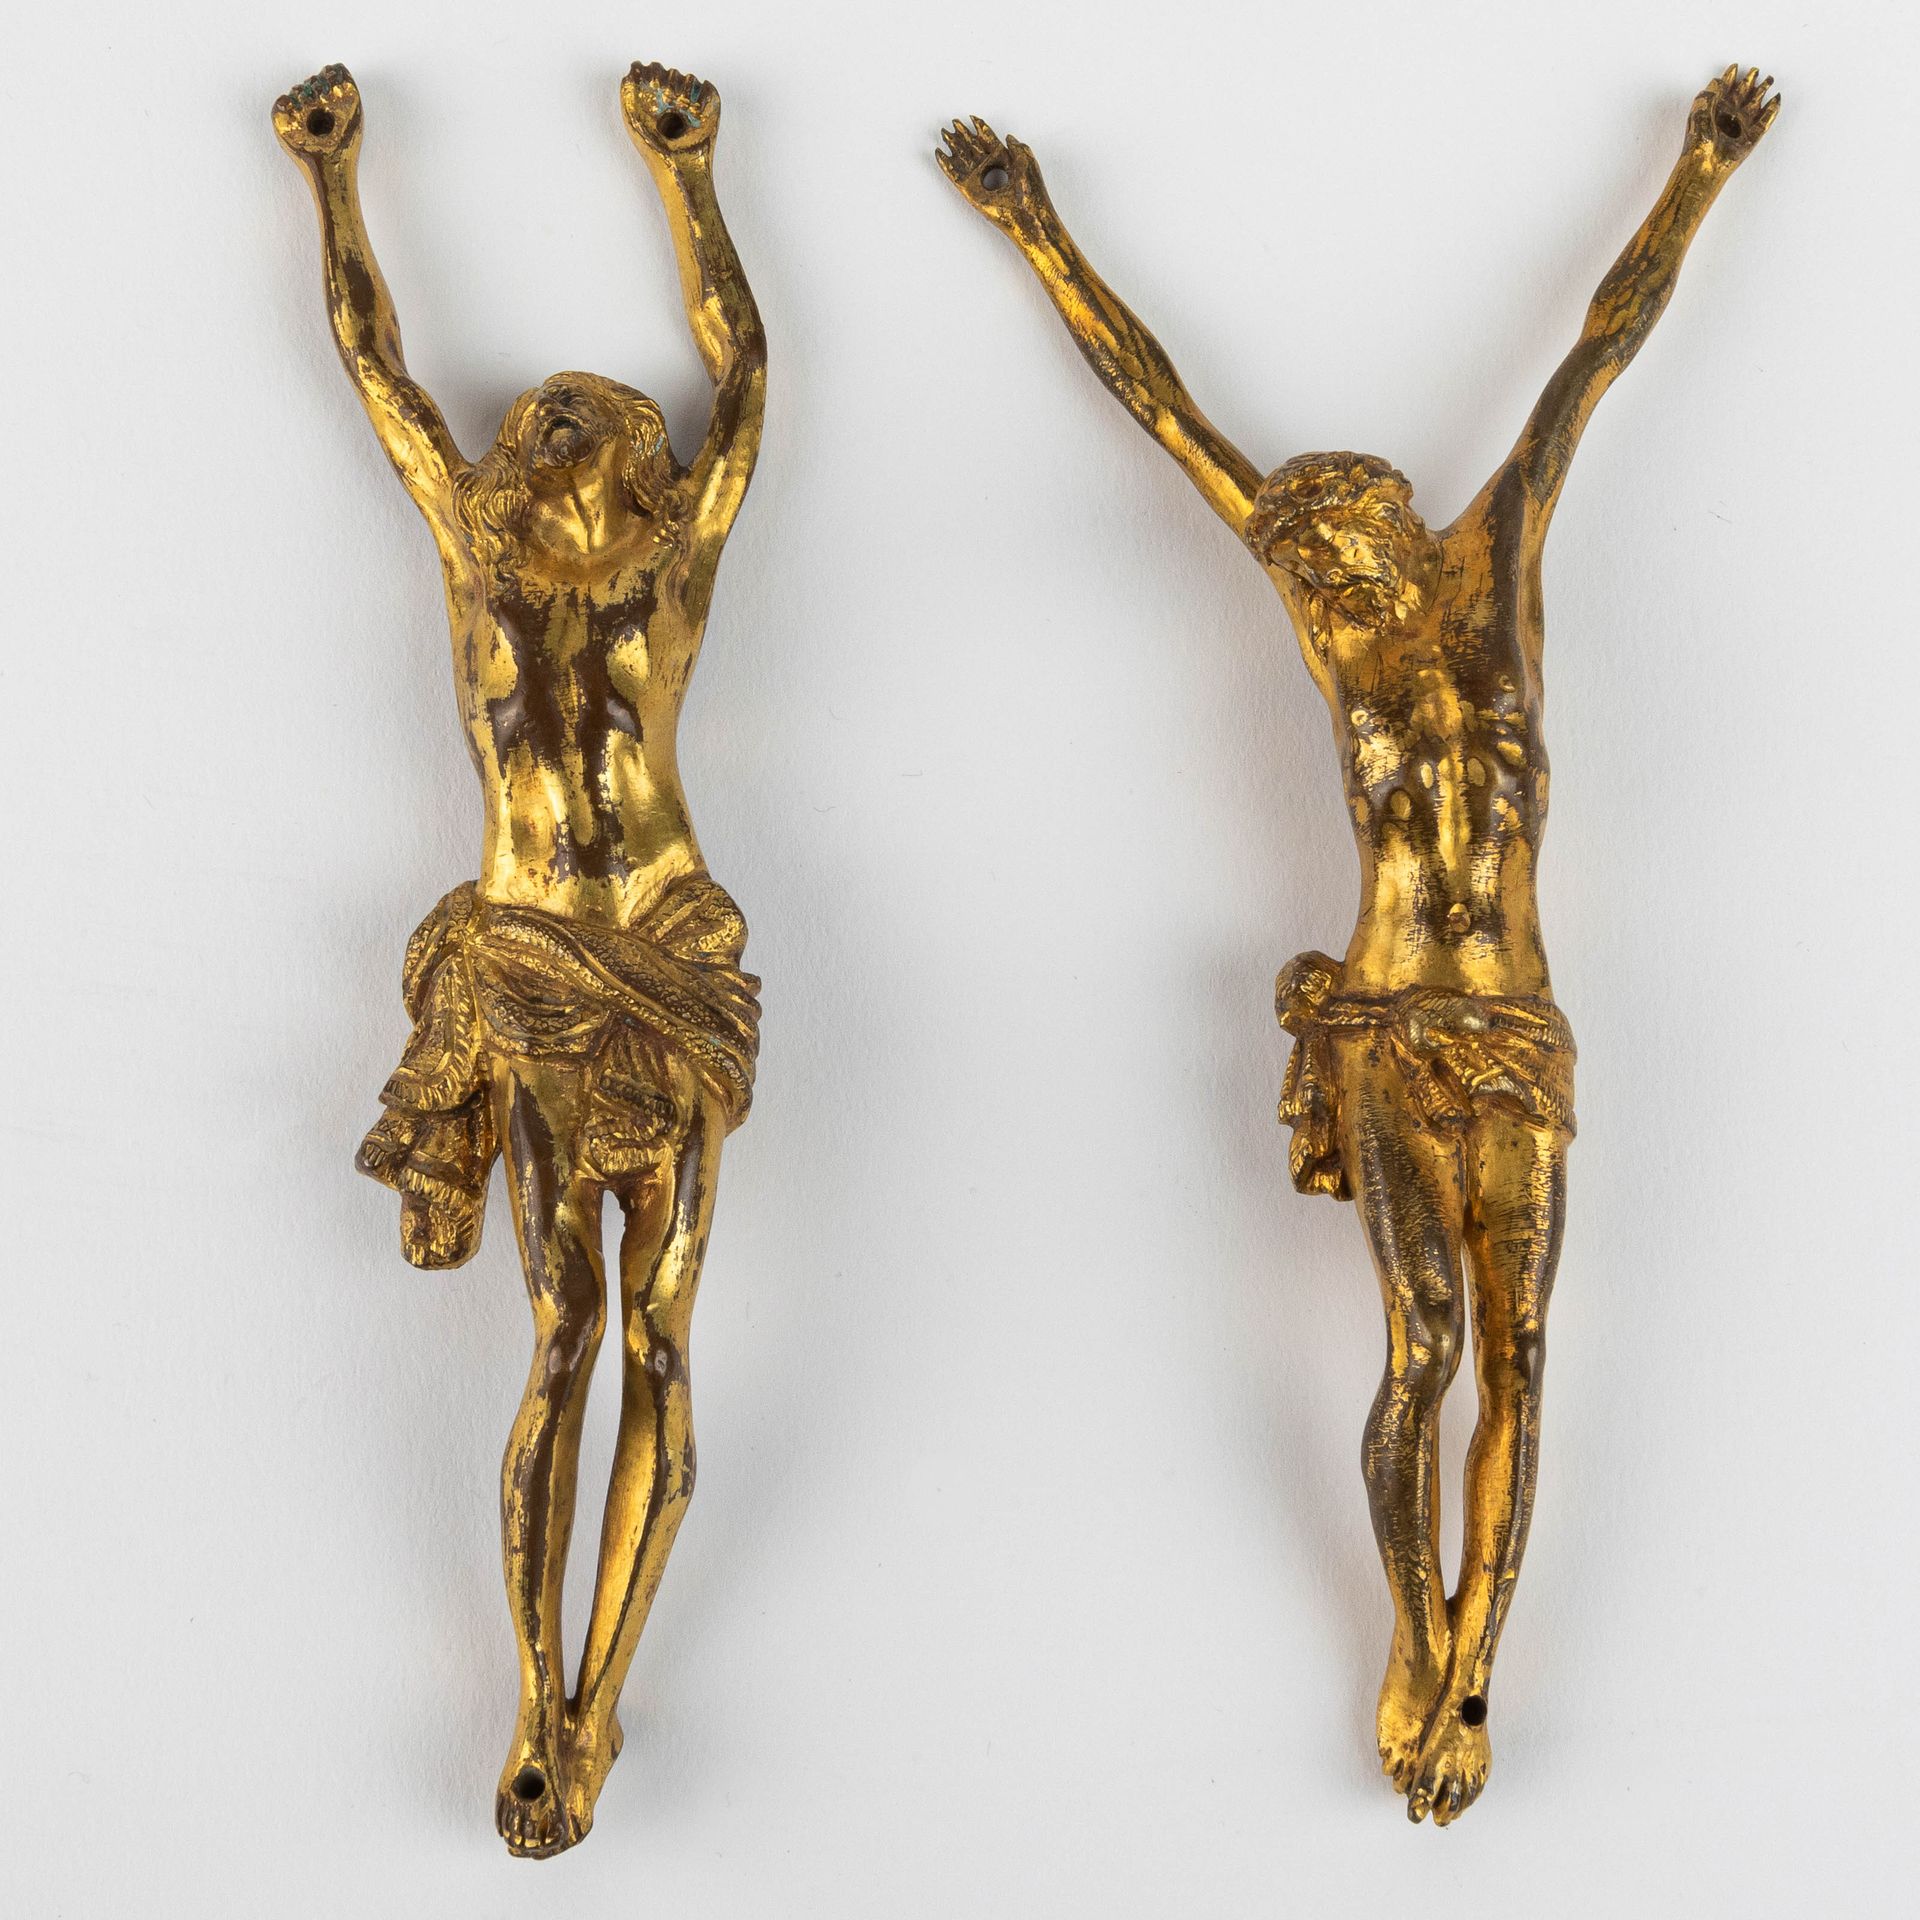 Lot varié de deux Corpus Christi. En bronze doré: 多样化的两件鎏金铜制圣体拍品。

1.在詹森主义的立场上。弗&hellip;